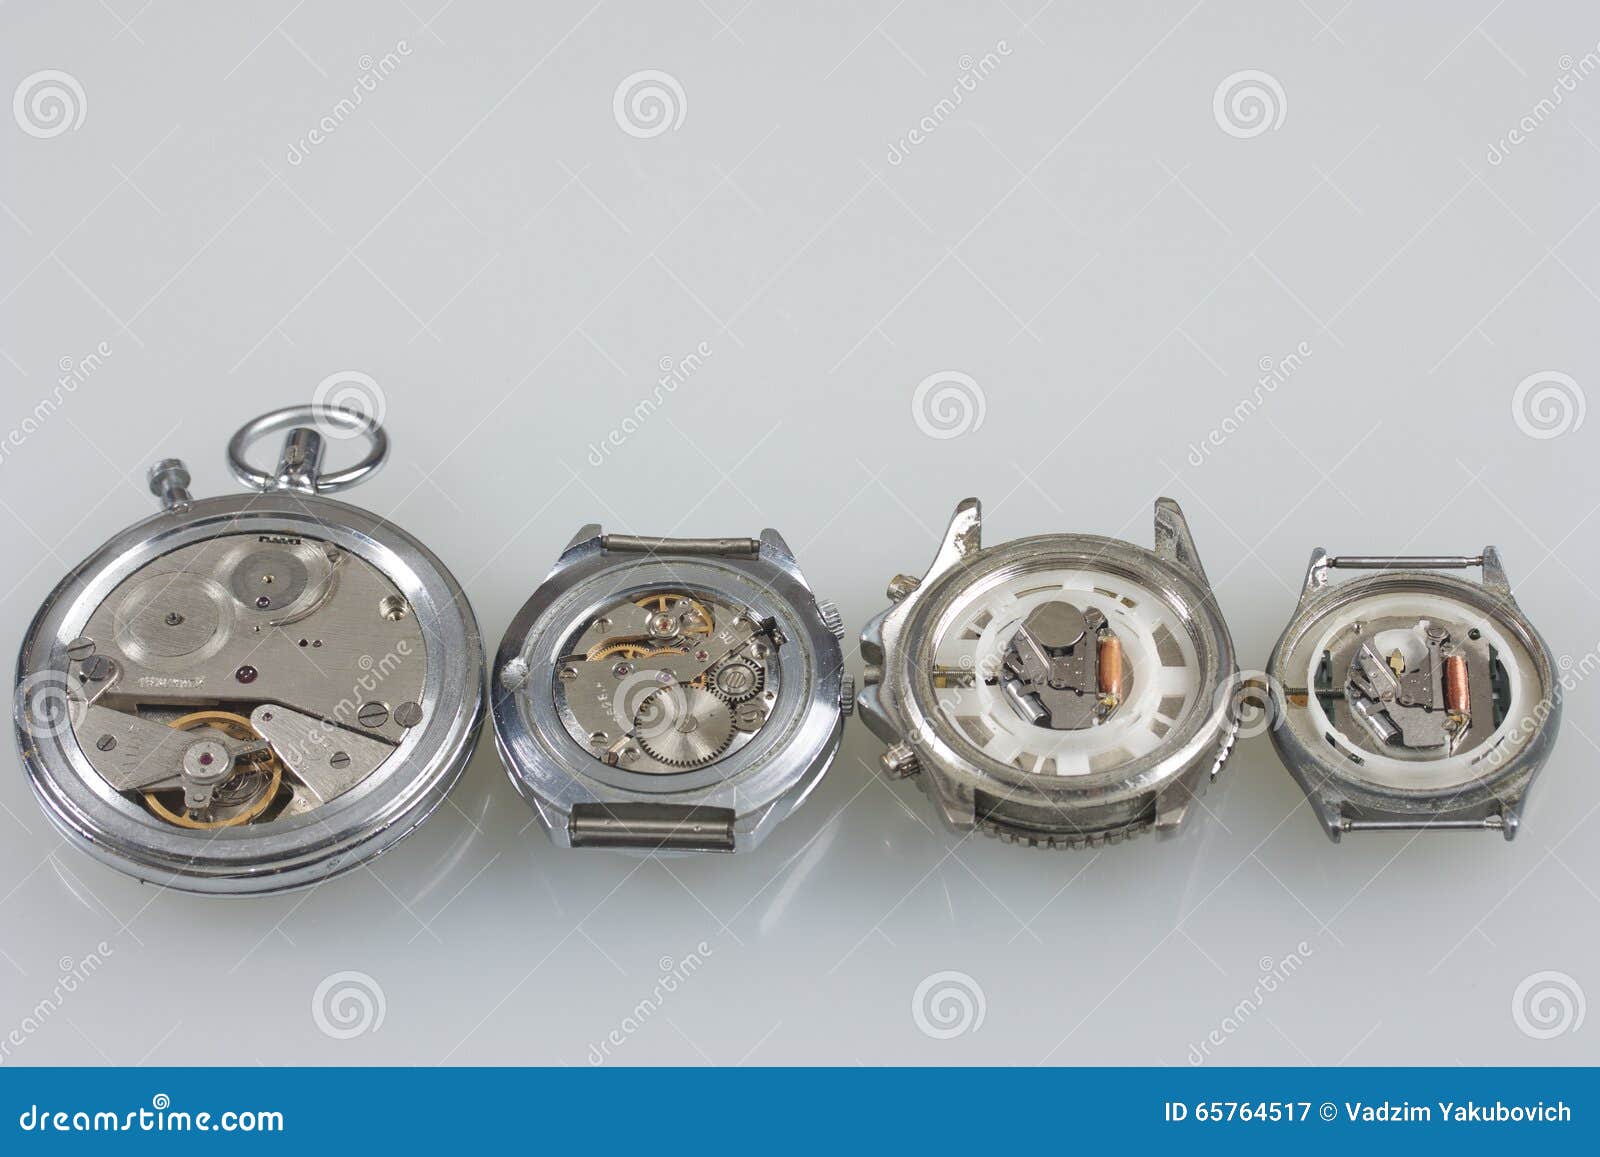 armwatch clock machine